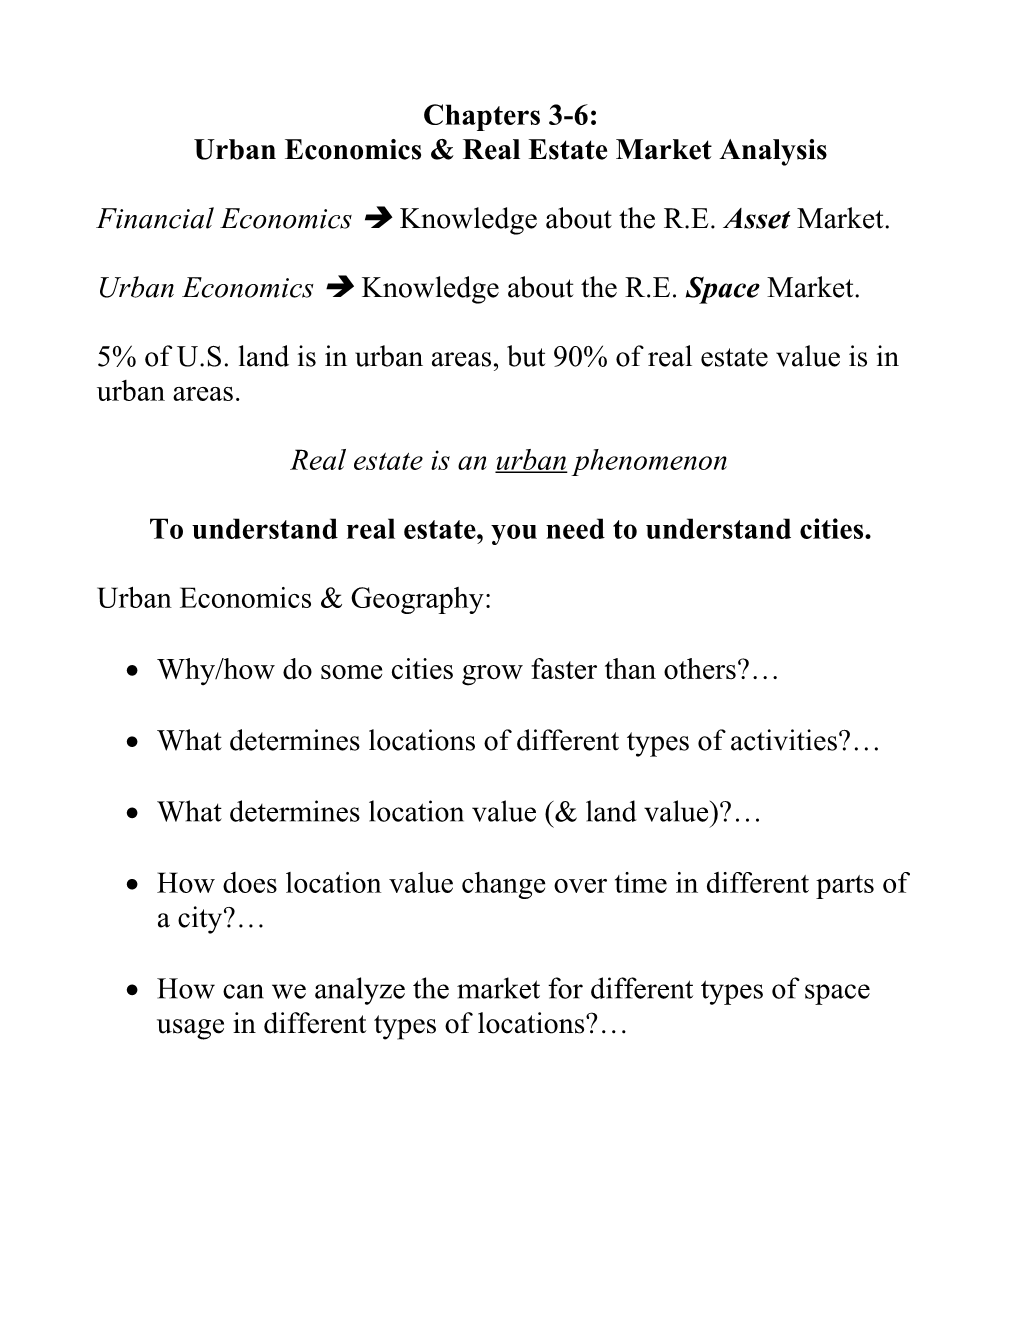 Urban Economics & Real Estate Market Analysis